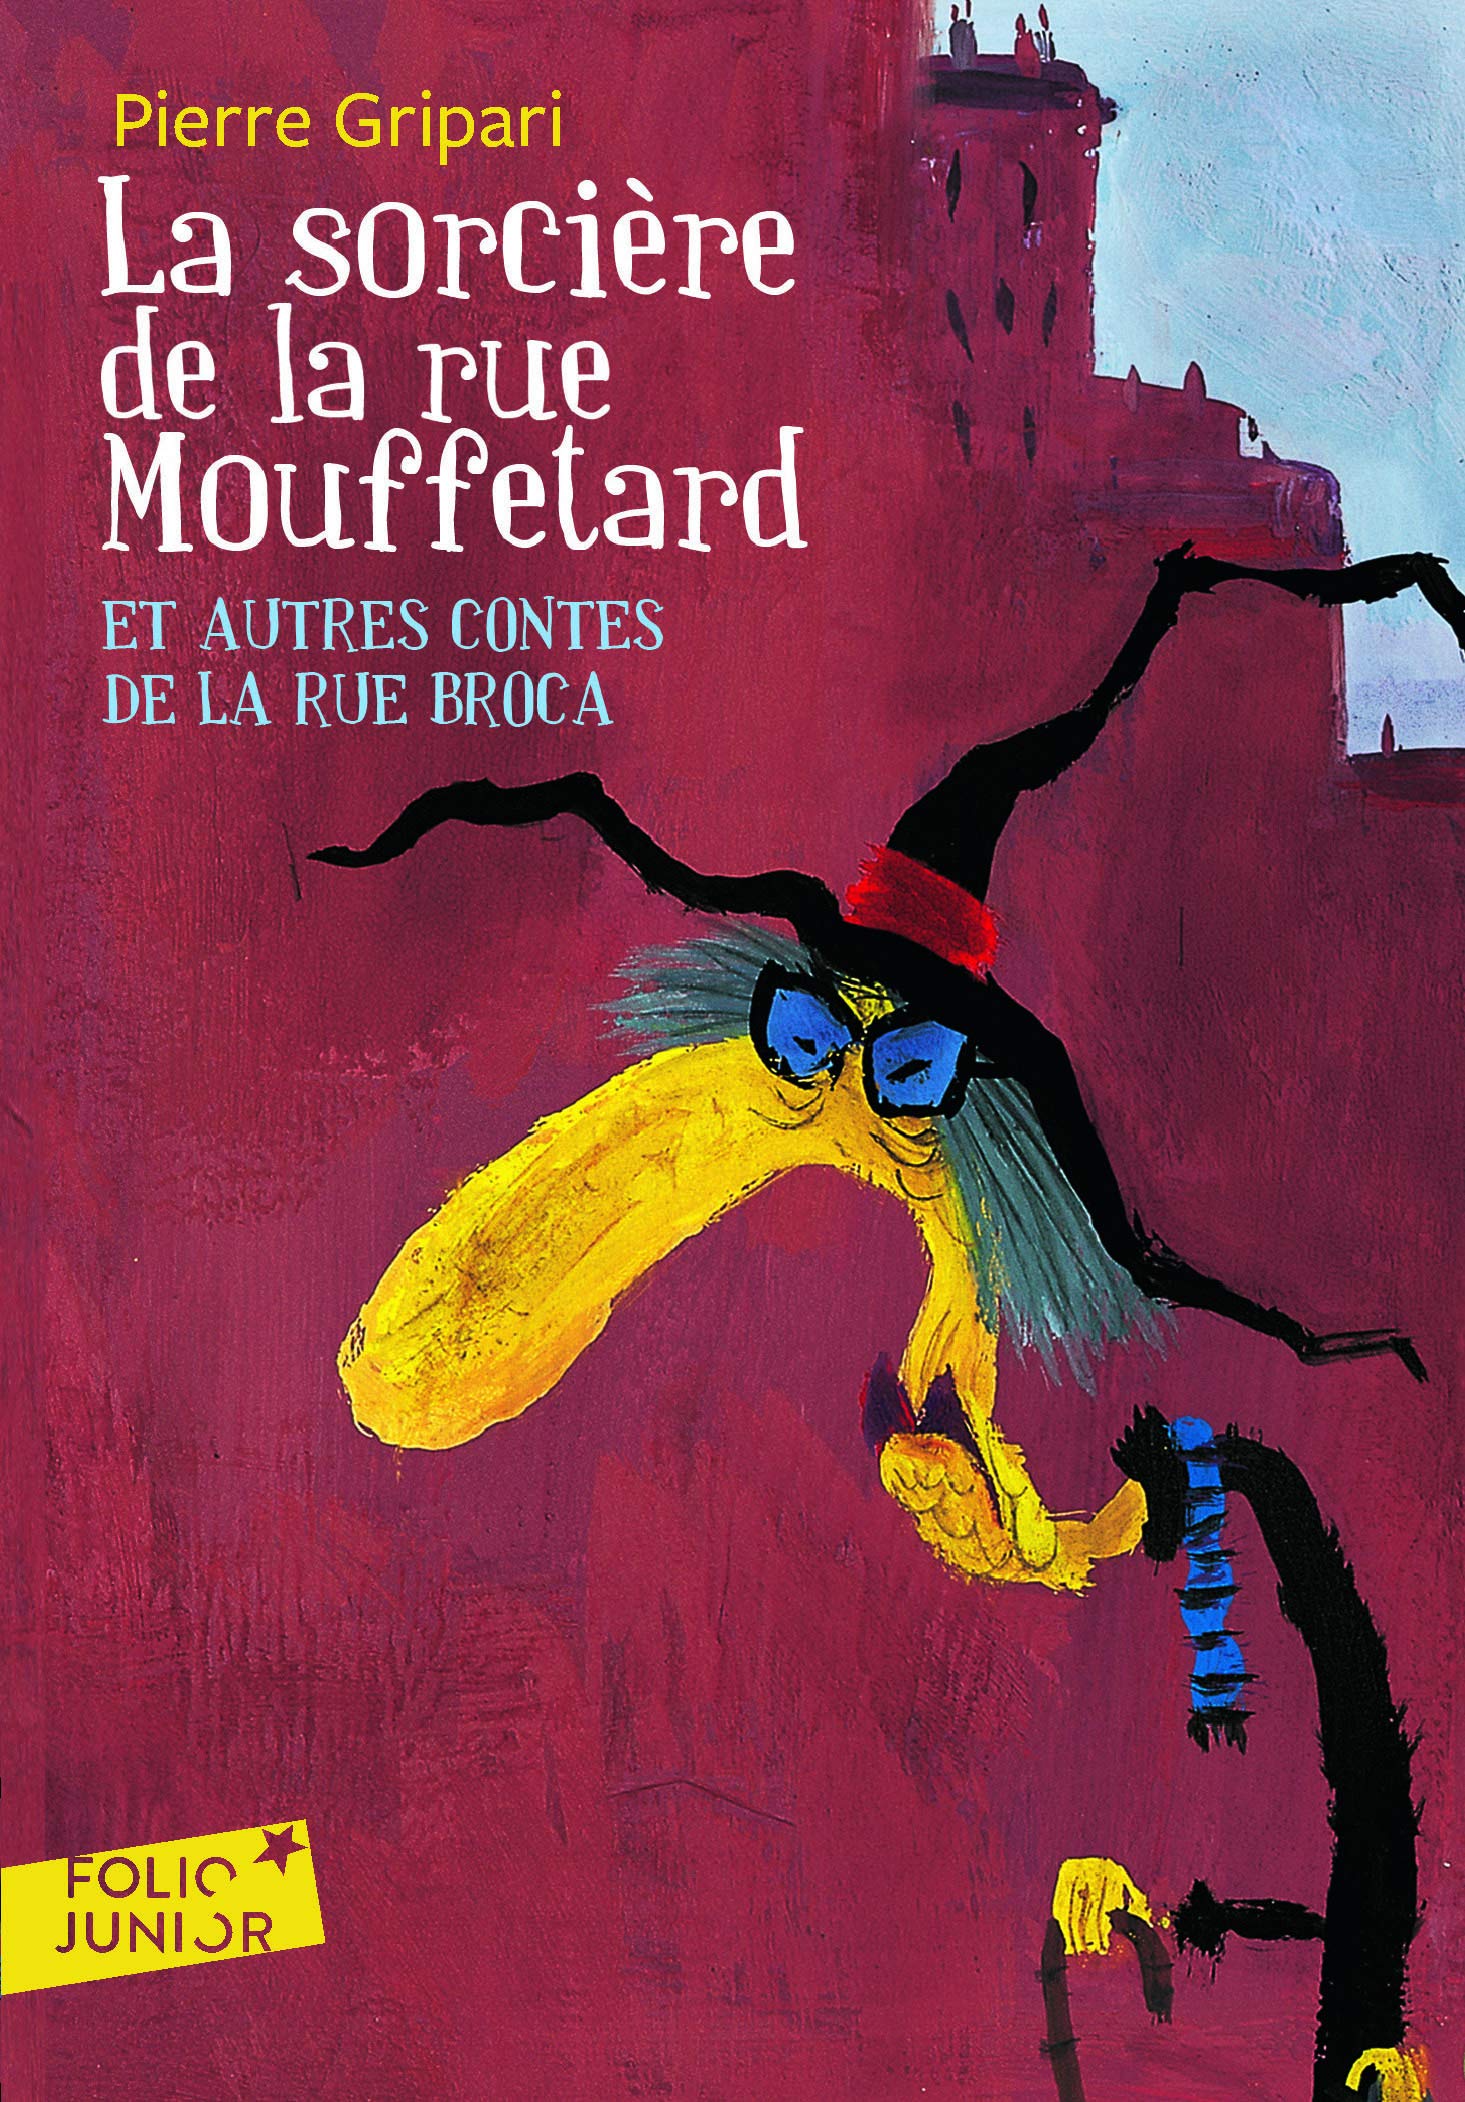 La sorciere de la rue Mouffetard et autres contes de la rue Broca